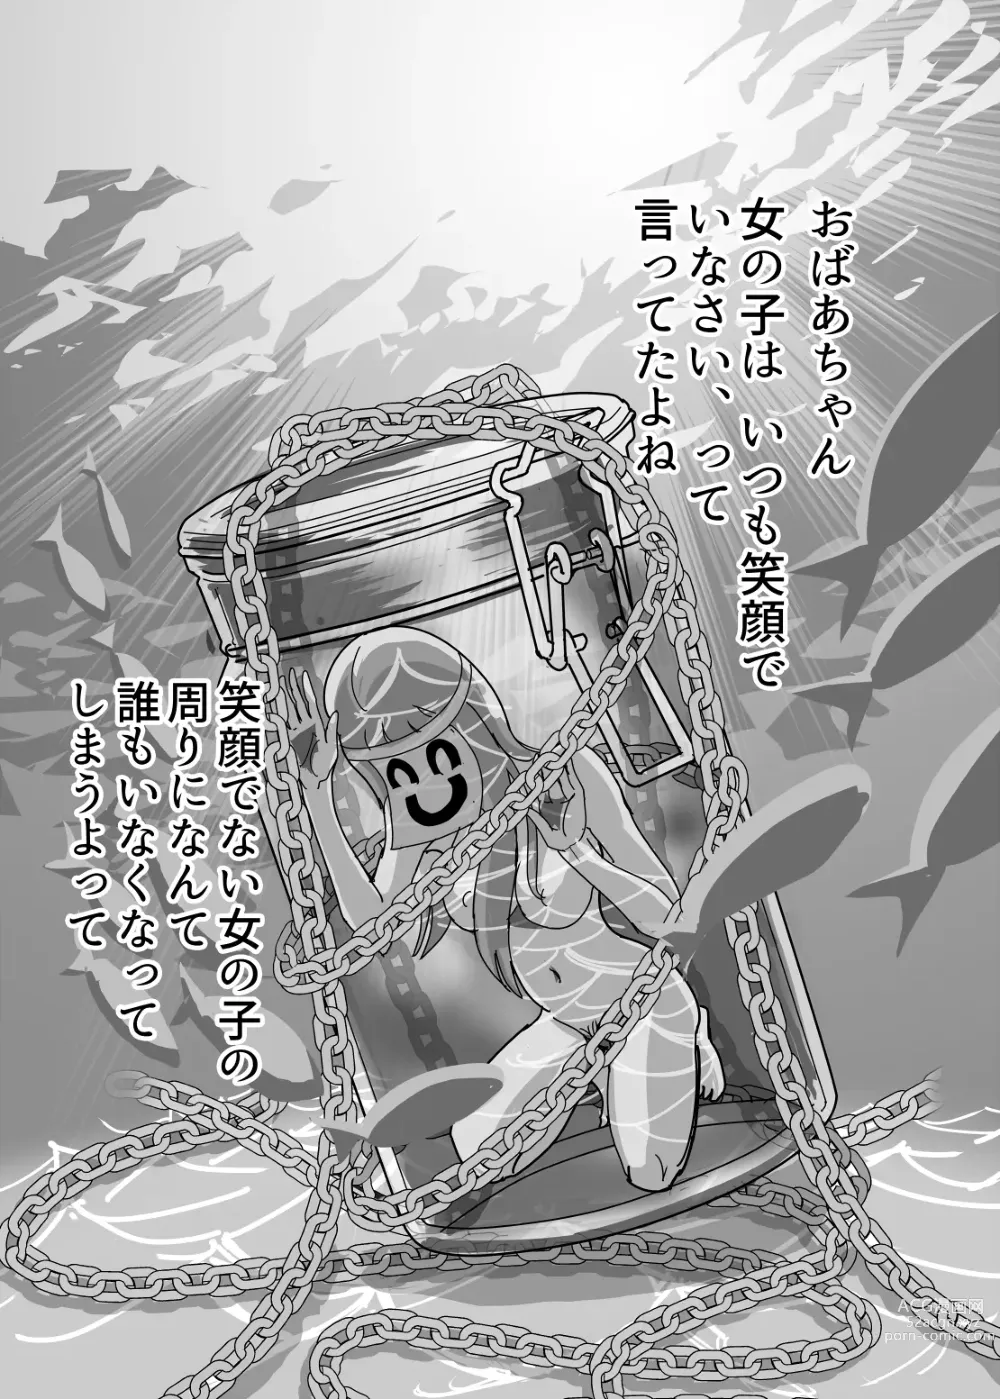 Page 7 of doujinshi Crybabys # 2 Miiko Matome